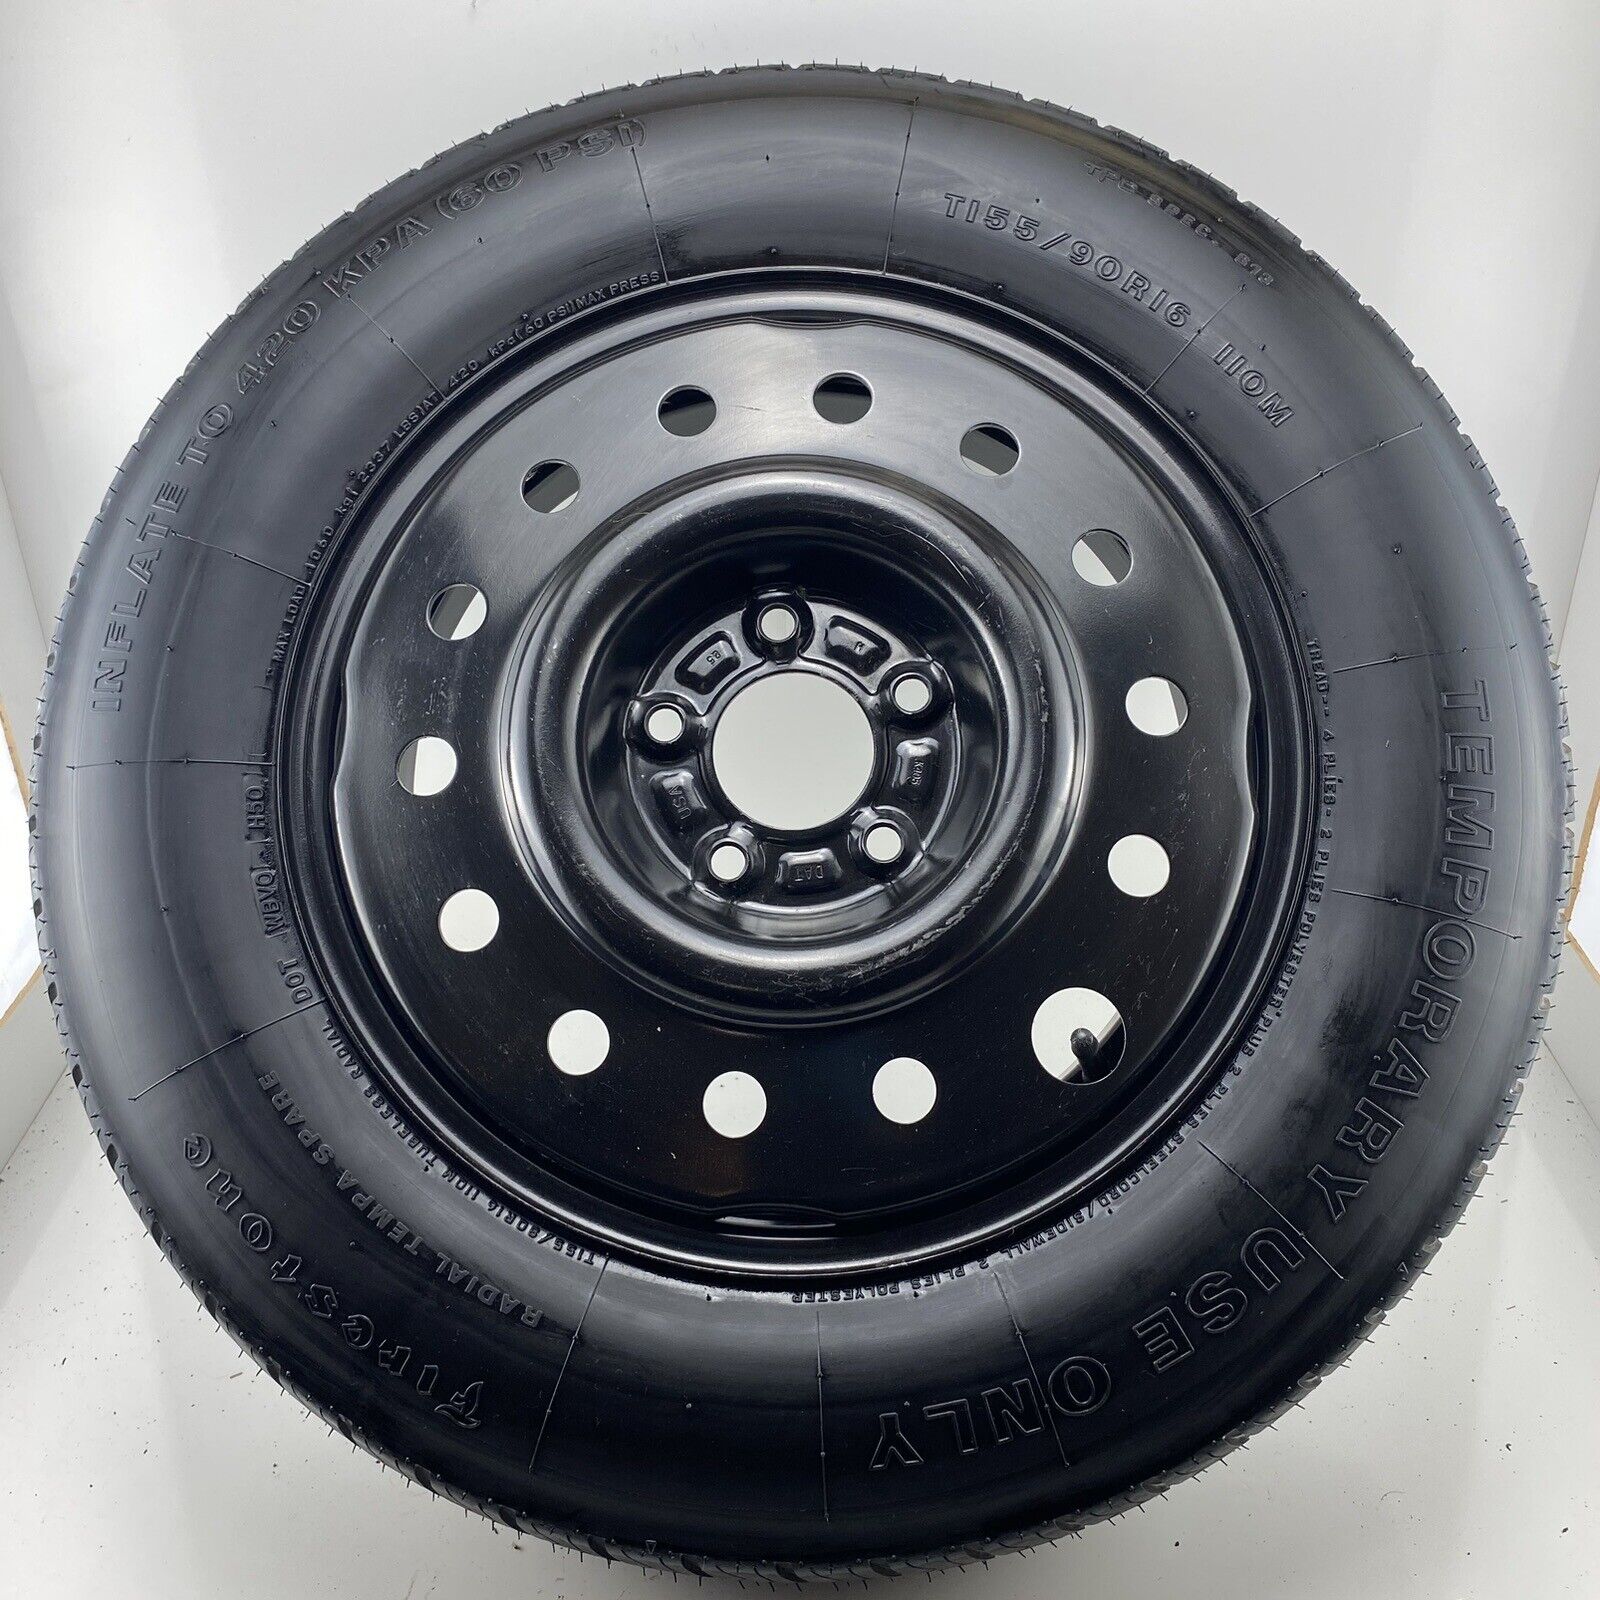 2002-2010 Saturn Vue Spare Tire Donut Compact Emergency Wheel Rim 155/90R16 OEM